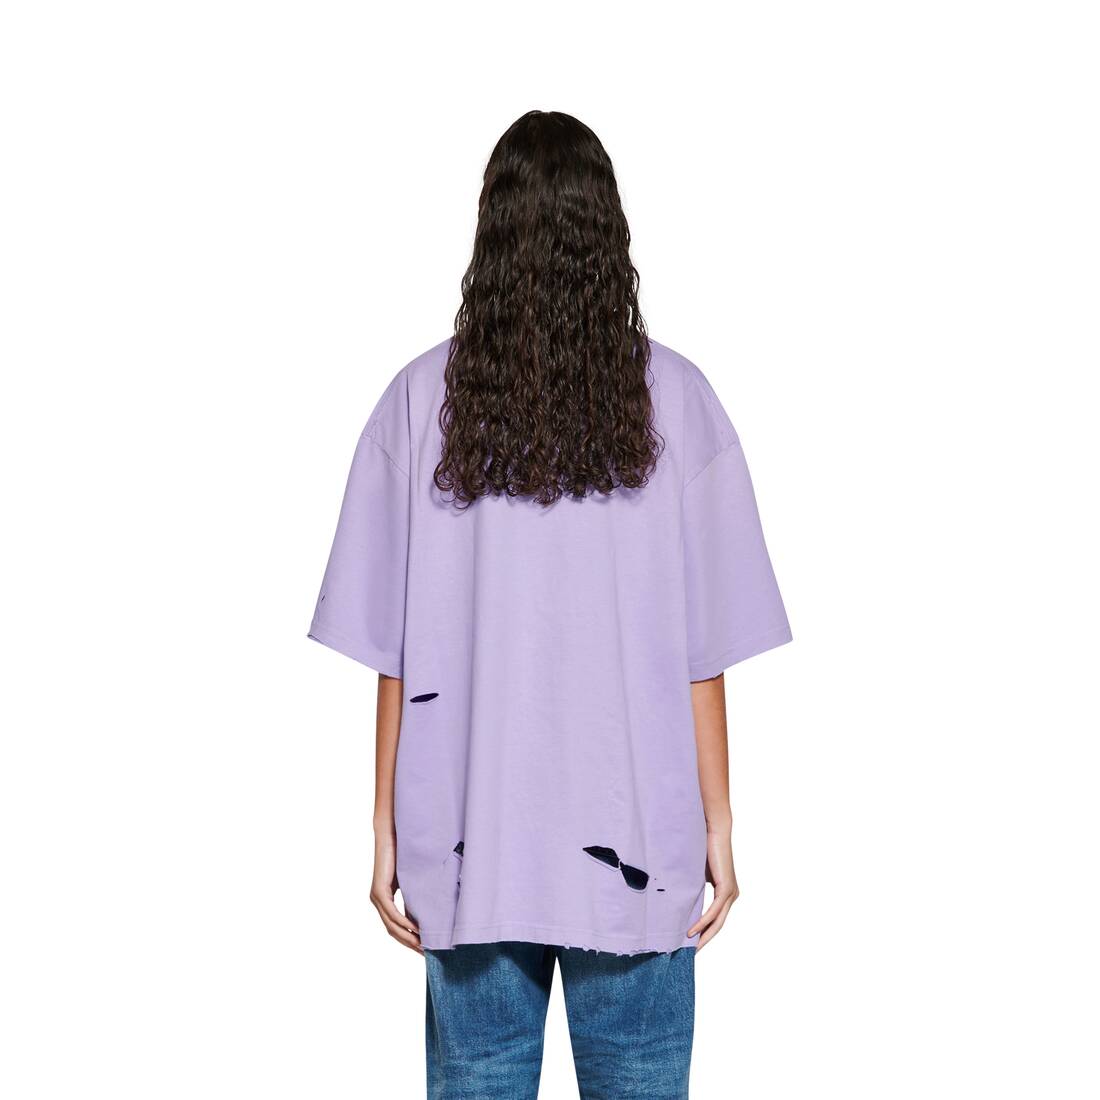 Balenciaga Purple Cotton T-Shirt